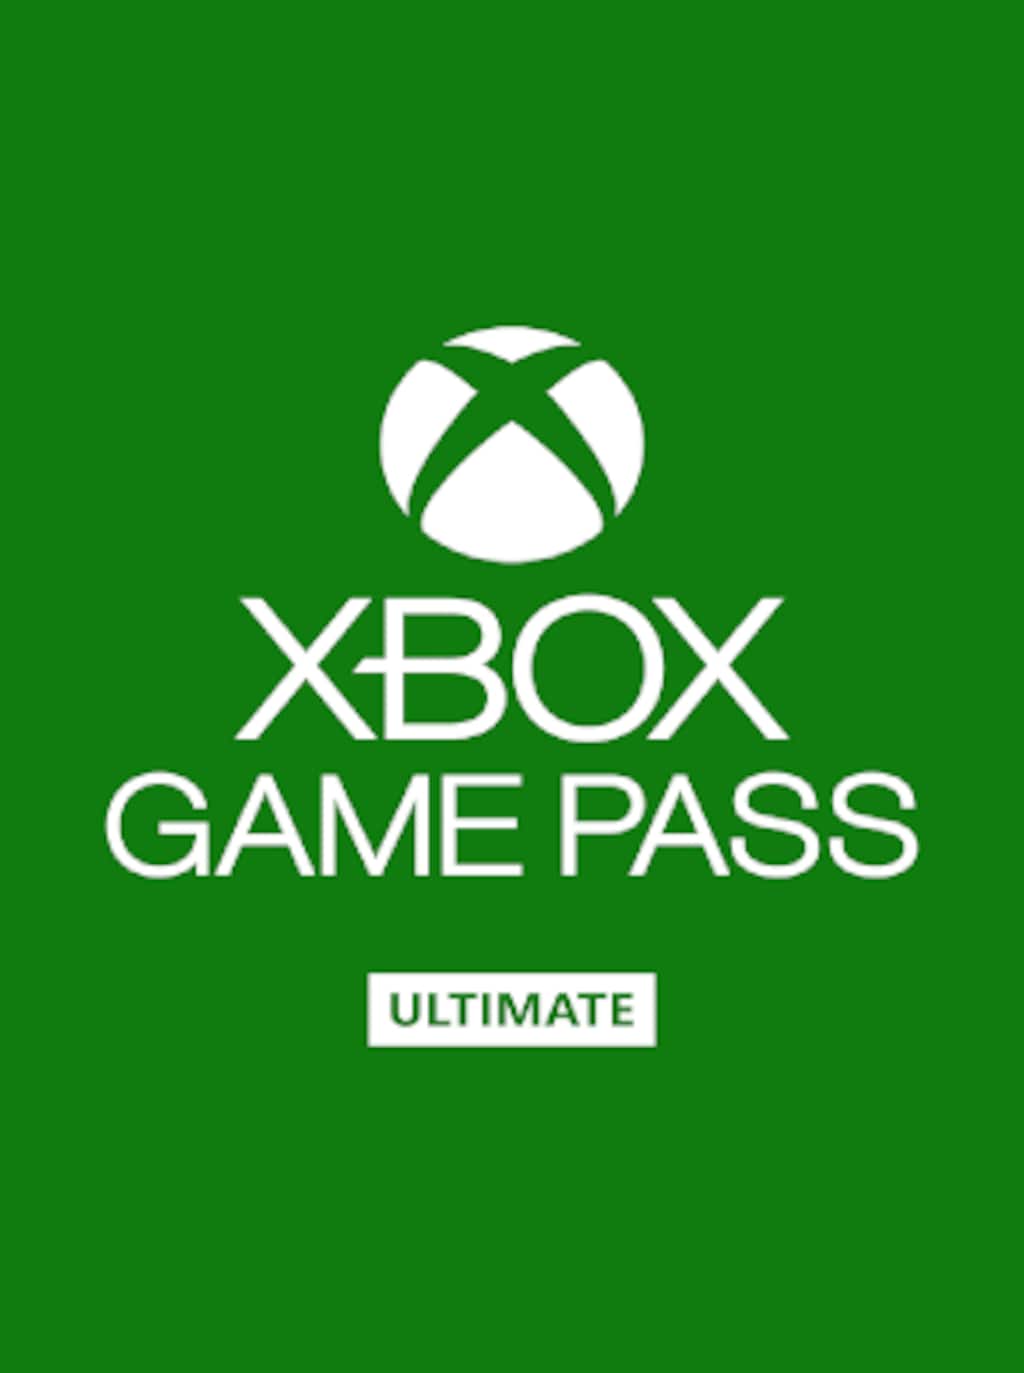 Clan Kolibrie hoe te gebruiken Buy XBOX Game Pass Ultimate Cheaper (PC & Console) - G2A.COM